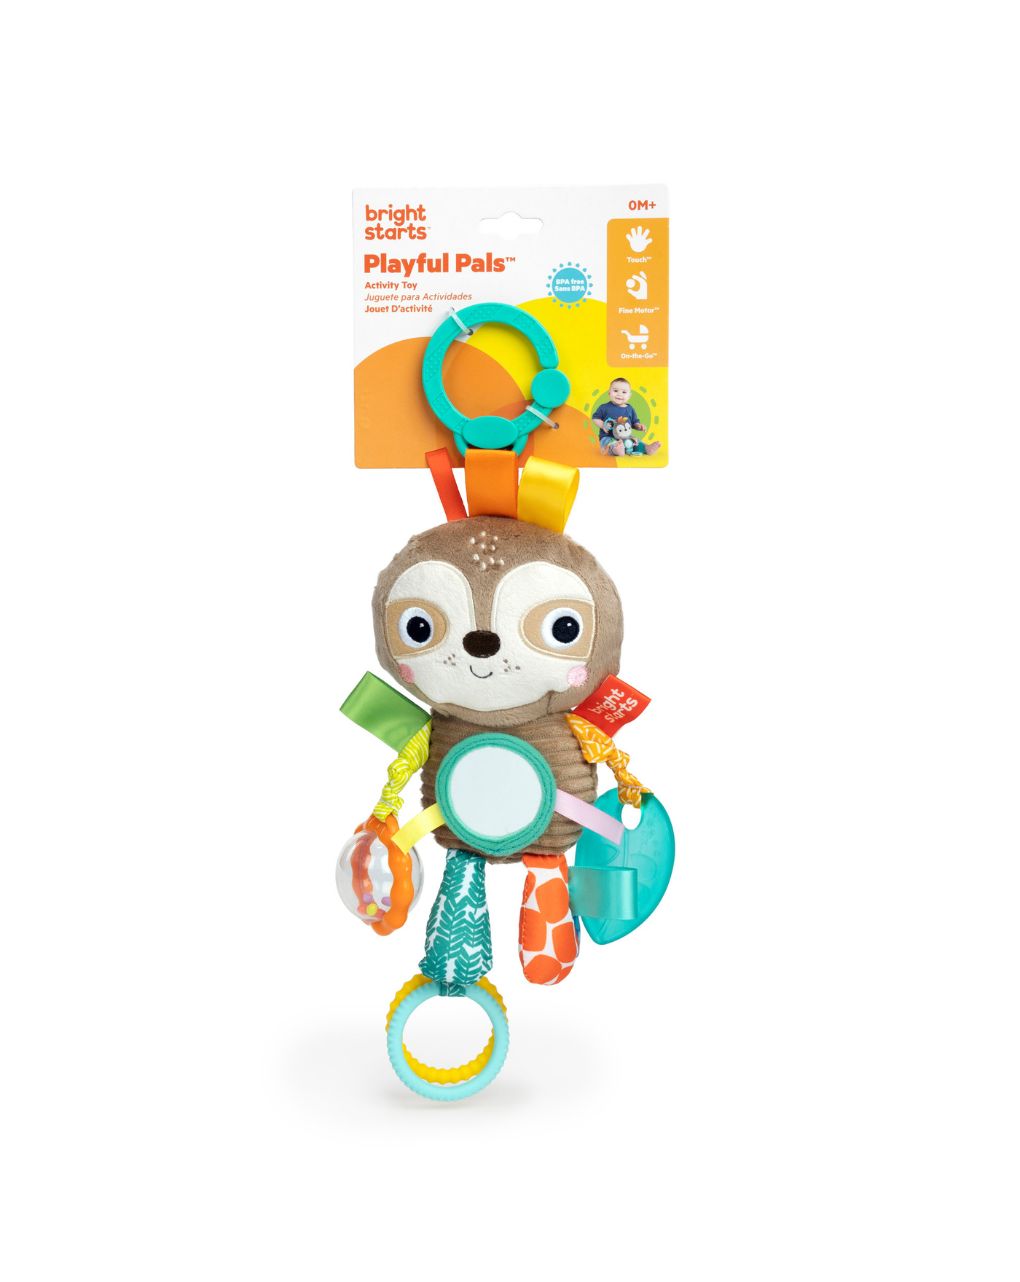 Bright starts kids ii playful pals activity toy - sloth 12274 - KIDS II